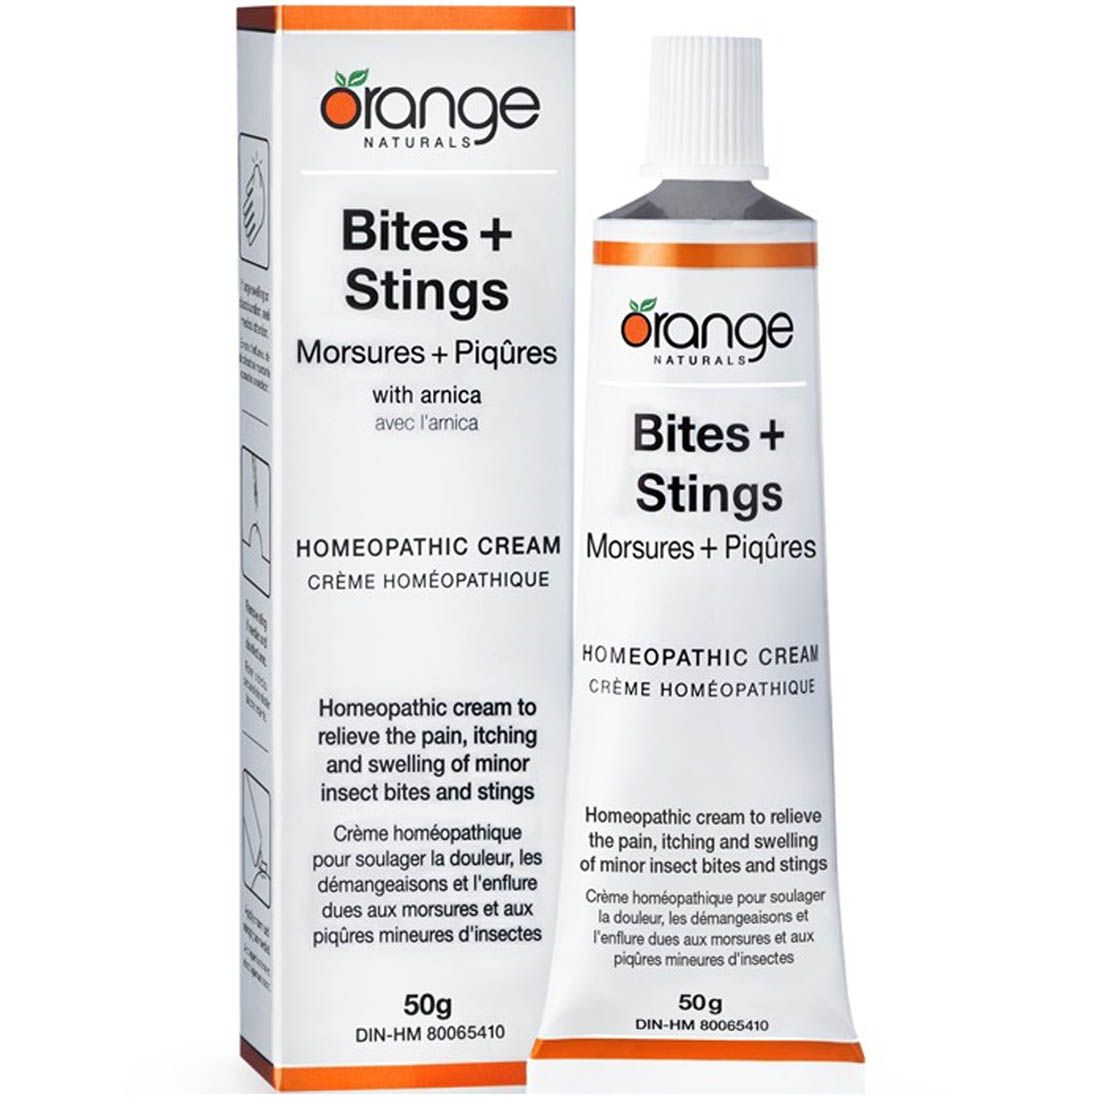 Orange Naturals Bites + Stings Homeopathic Cream 50g